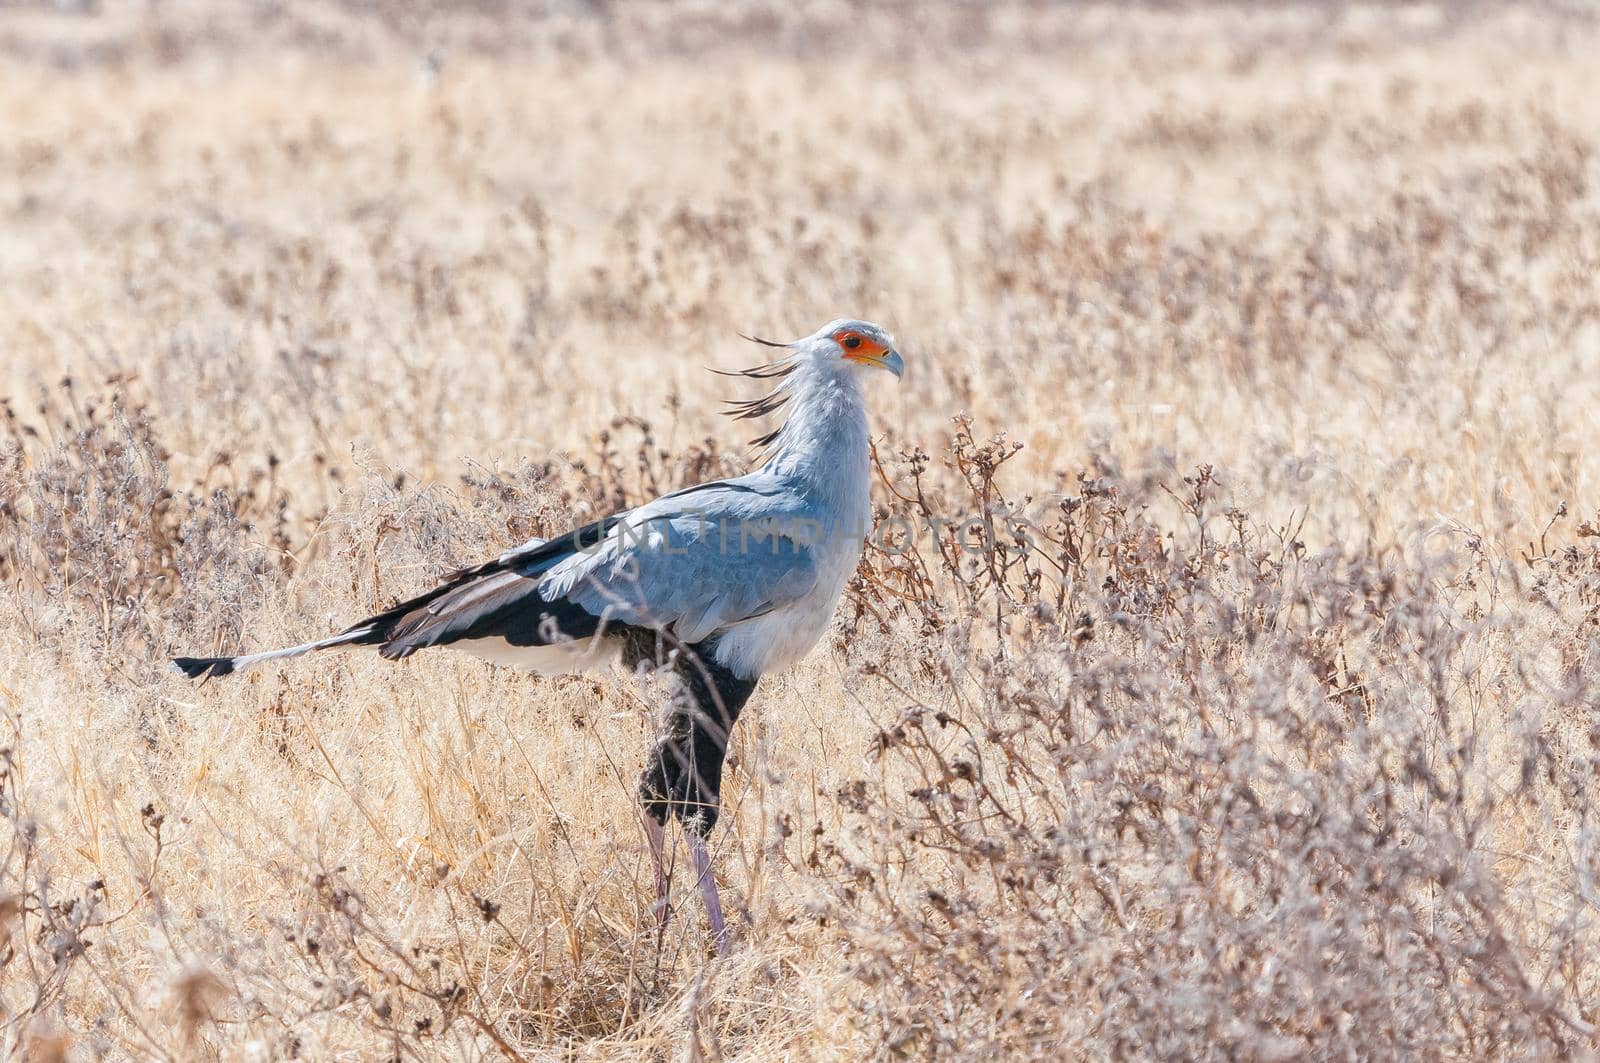 Secretary Bird, Sagittarius serpentarius, on the ground in northern Namibia by dpreezg